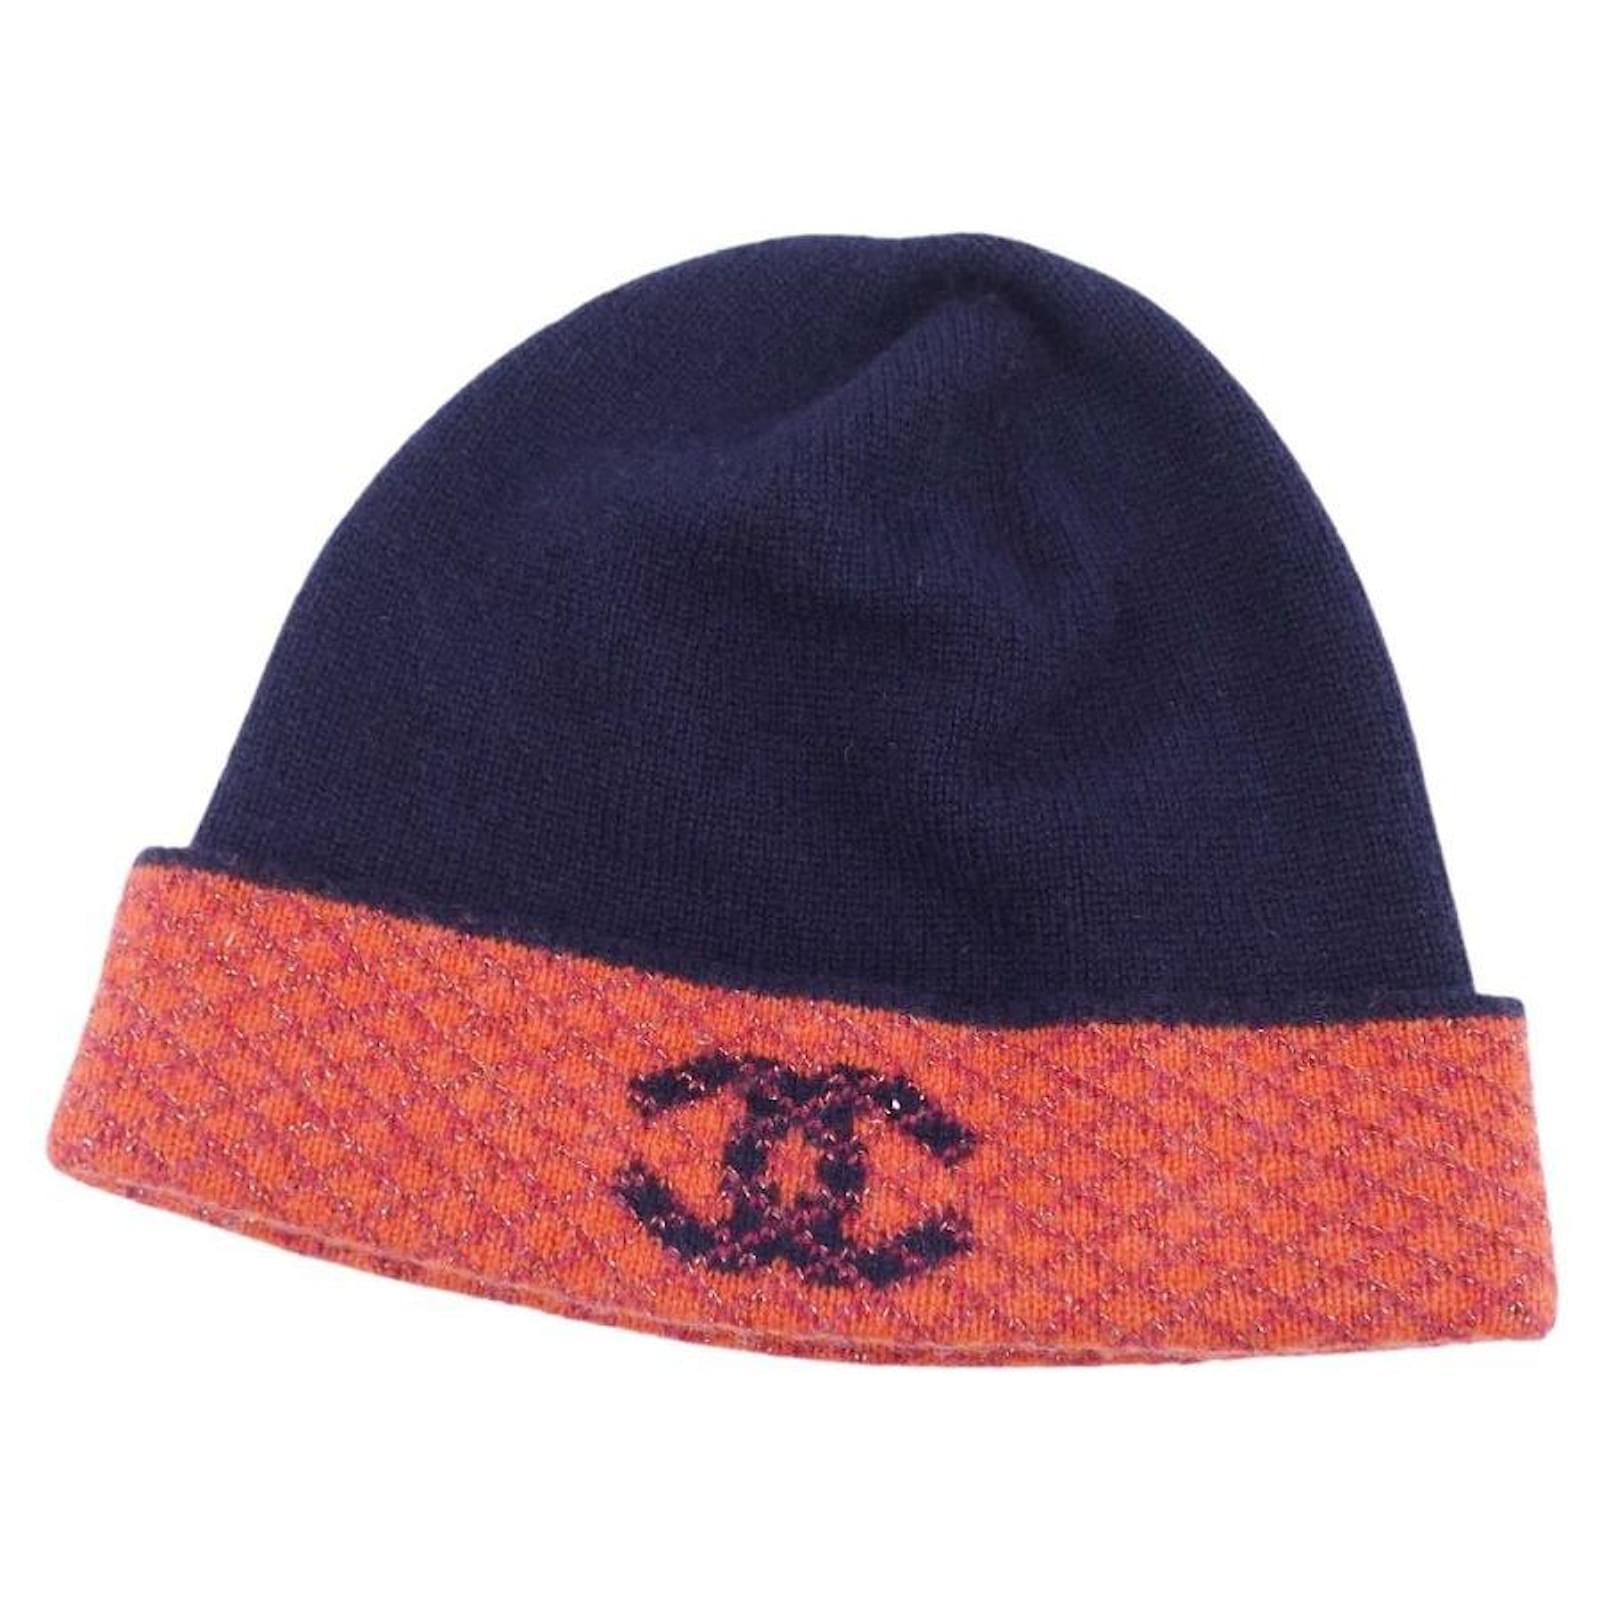 Chanel hat 18K Knit Hat Cap Coco Mark Cashmere Men's Women's Navy / Orange